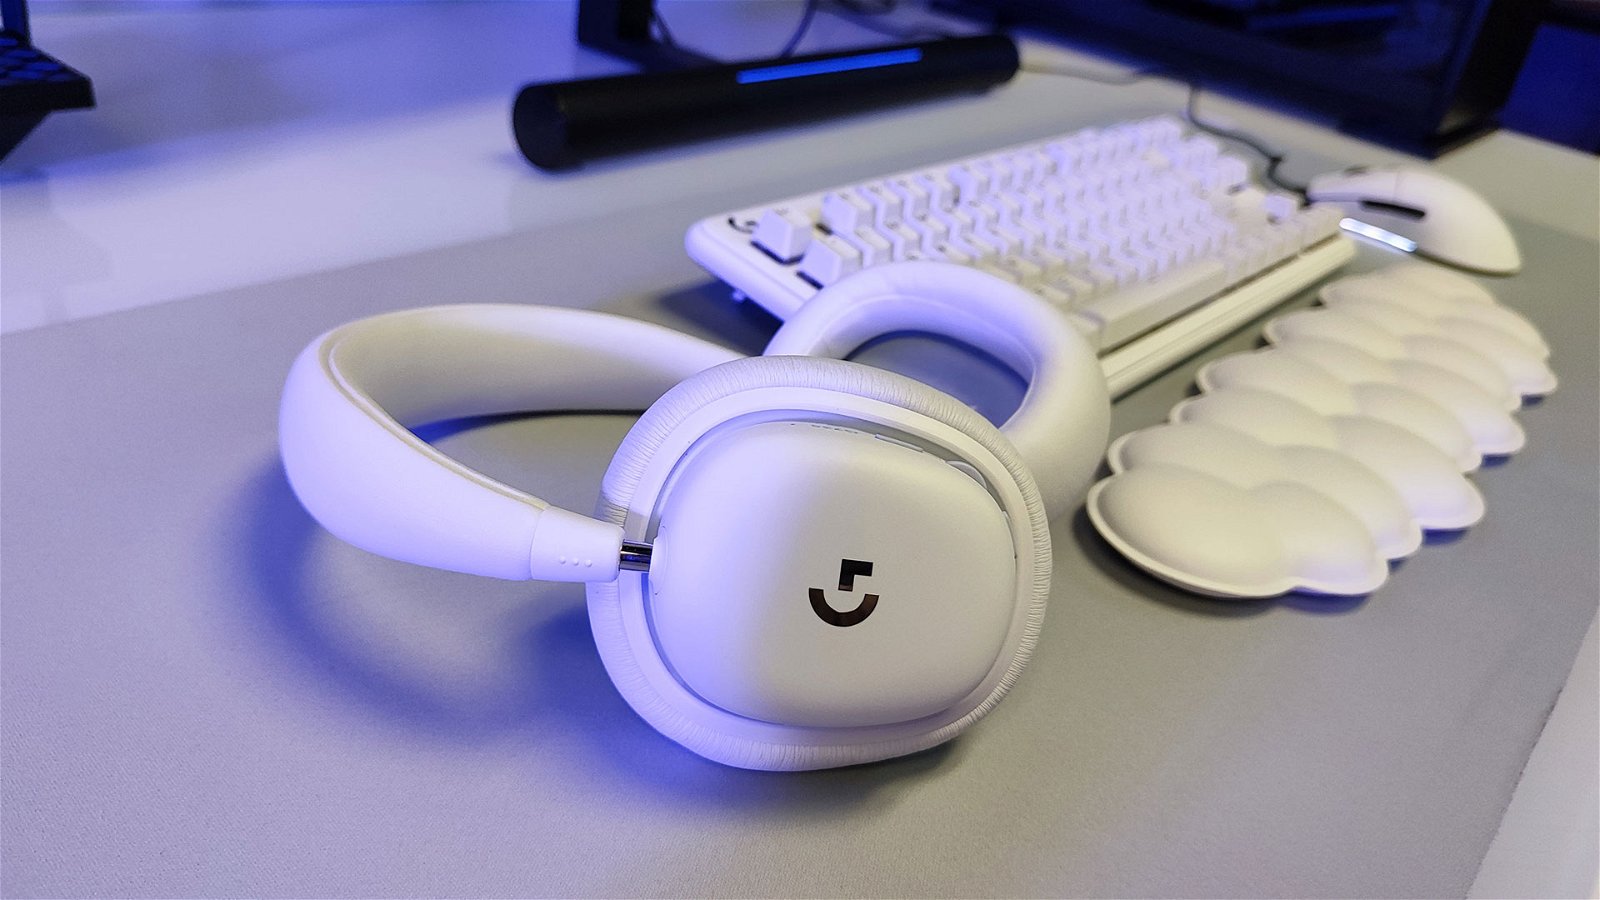 Logitech G735 Wireless Gaming Headset - White